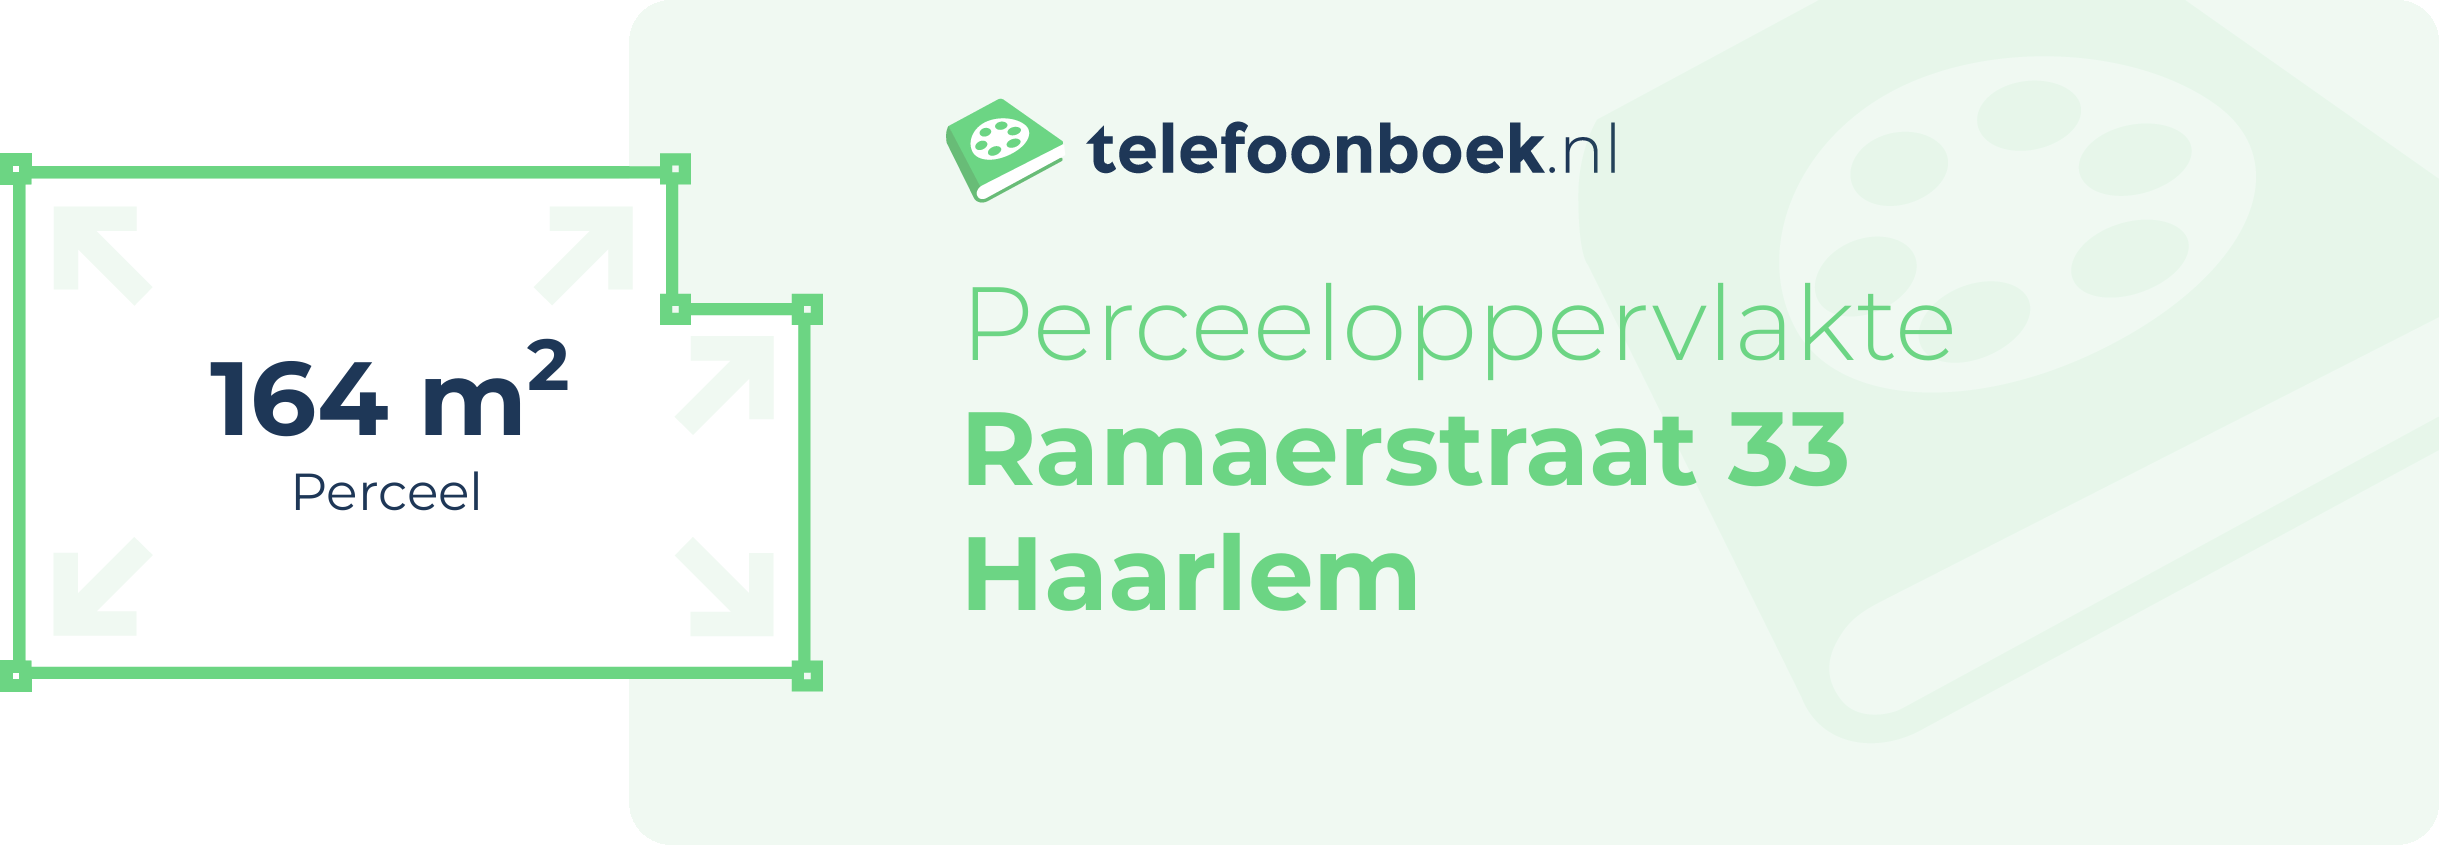 Perceeloppervlakte Ramaerstraat 33 Haarlem